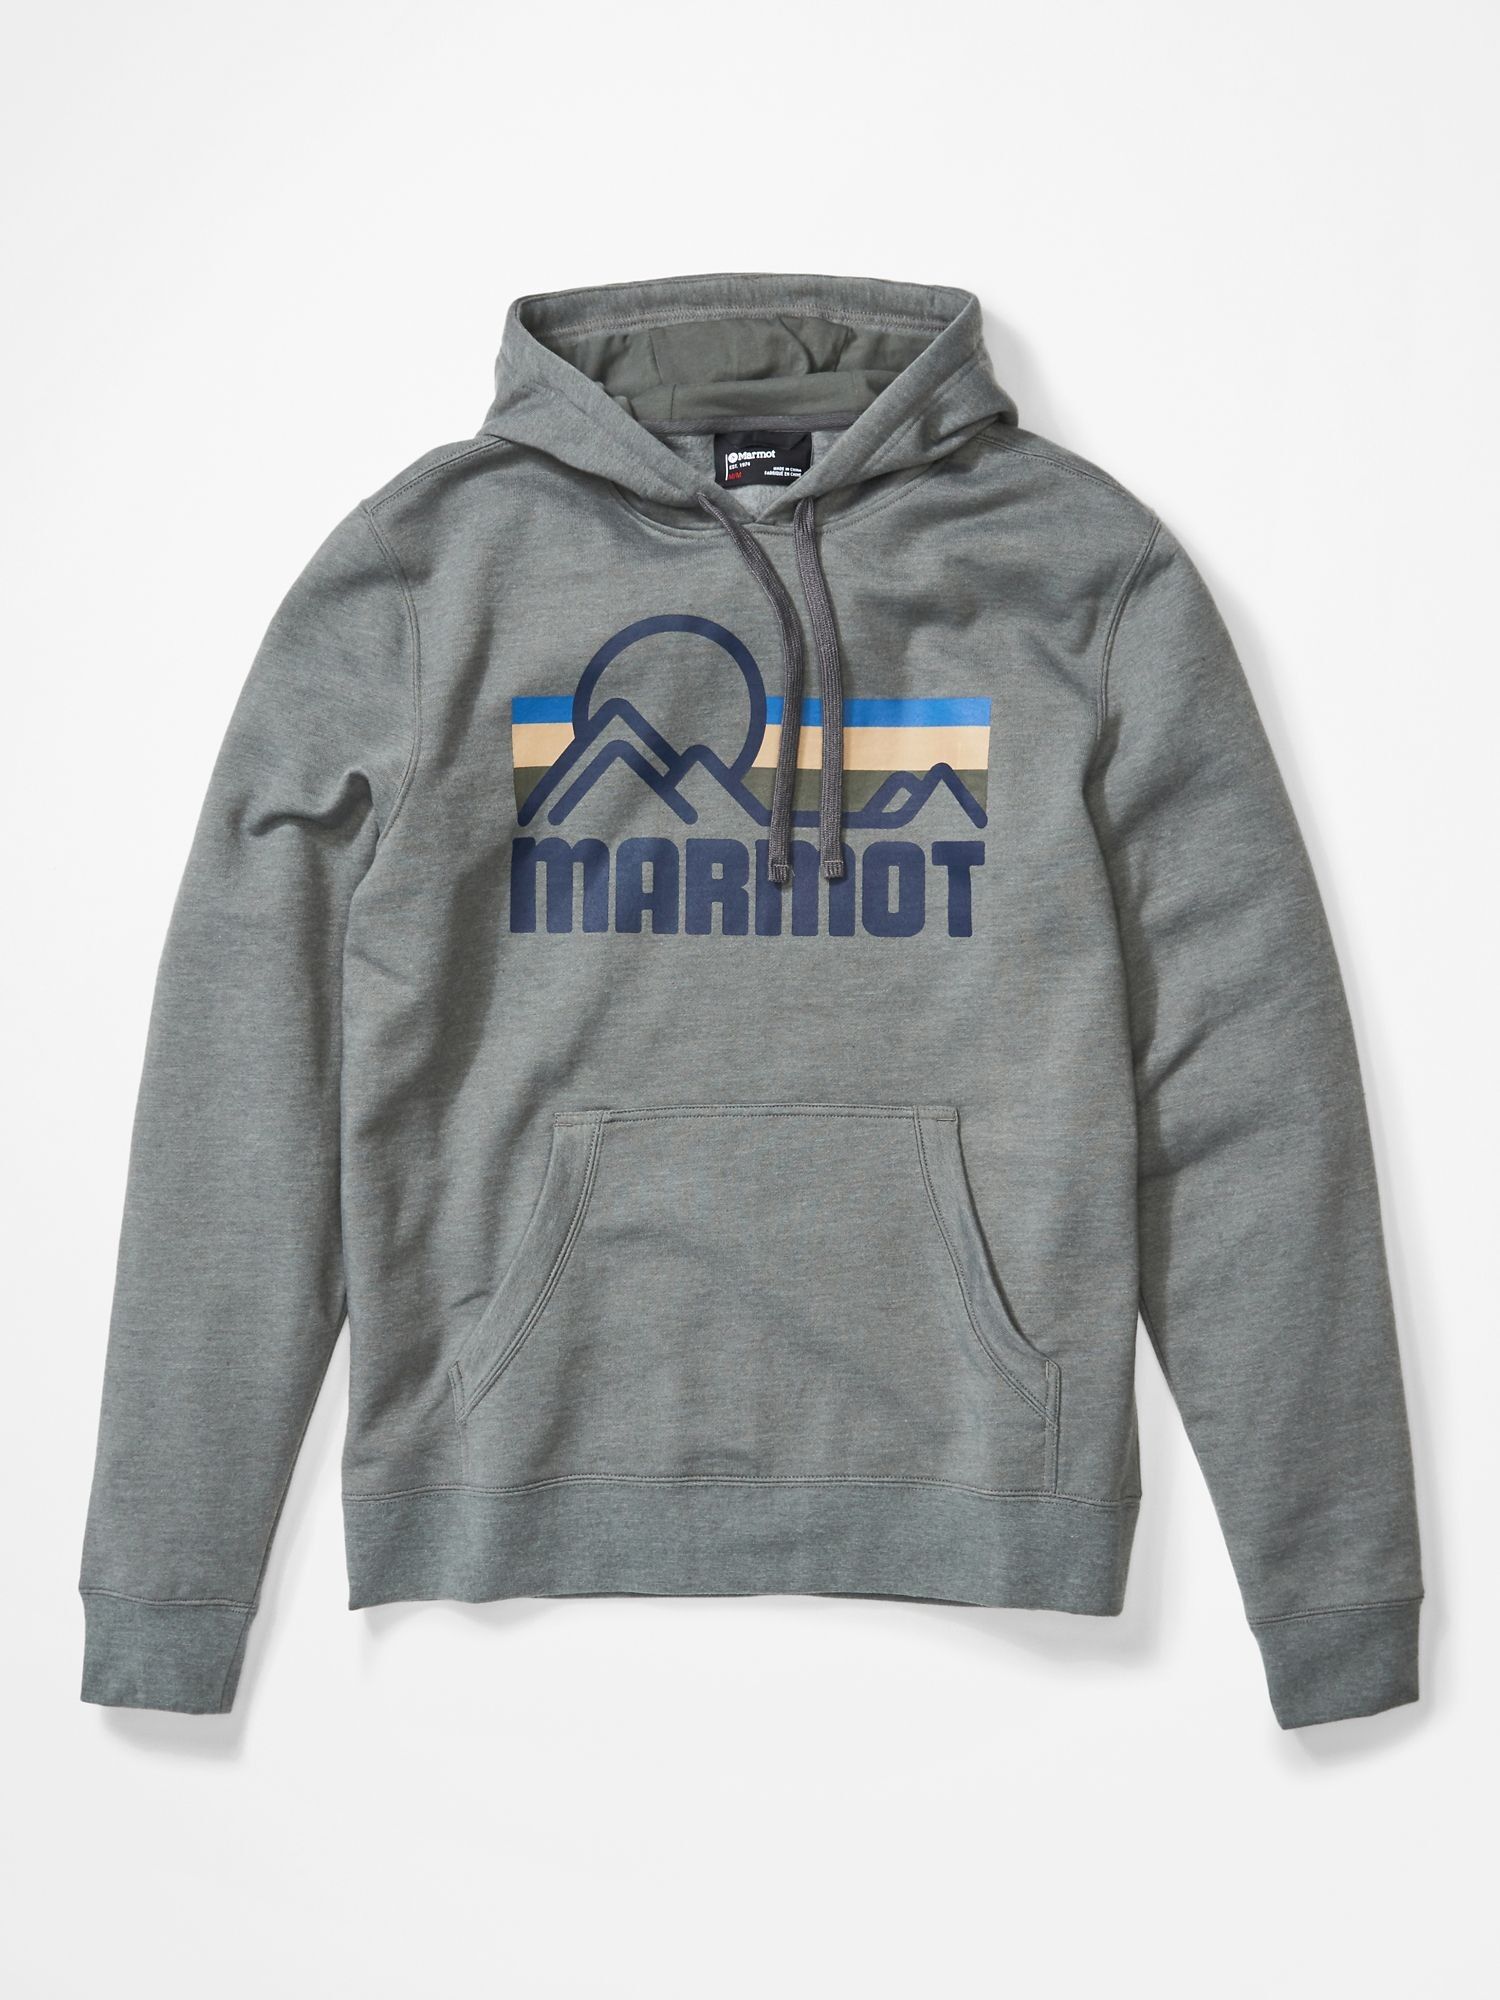 Marmot Coastal Hoody - Men's